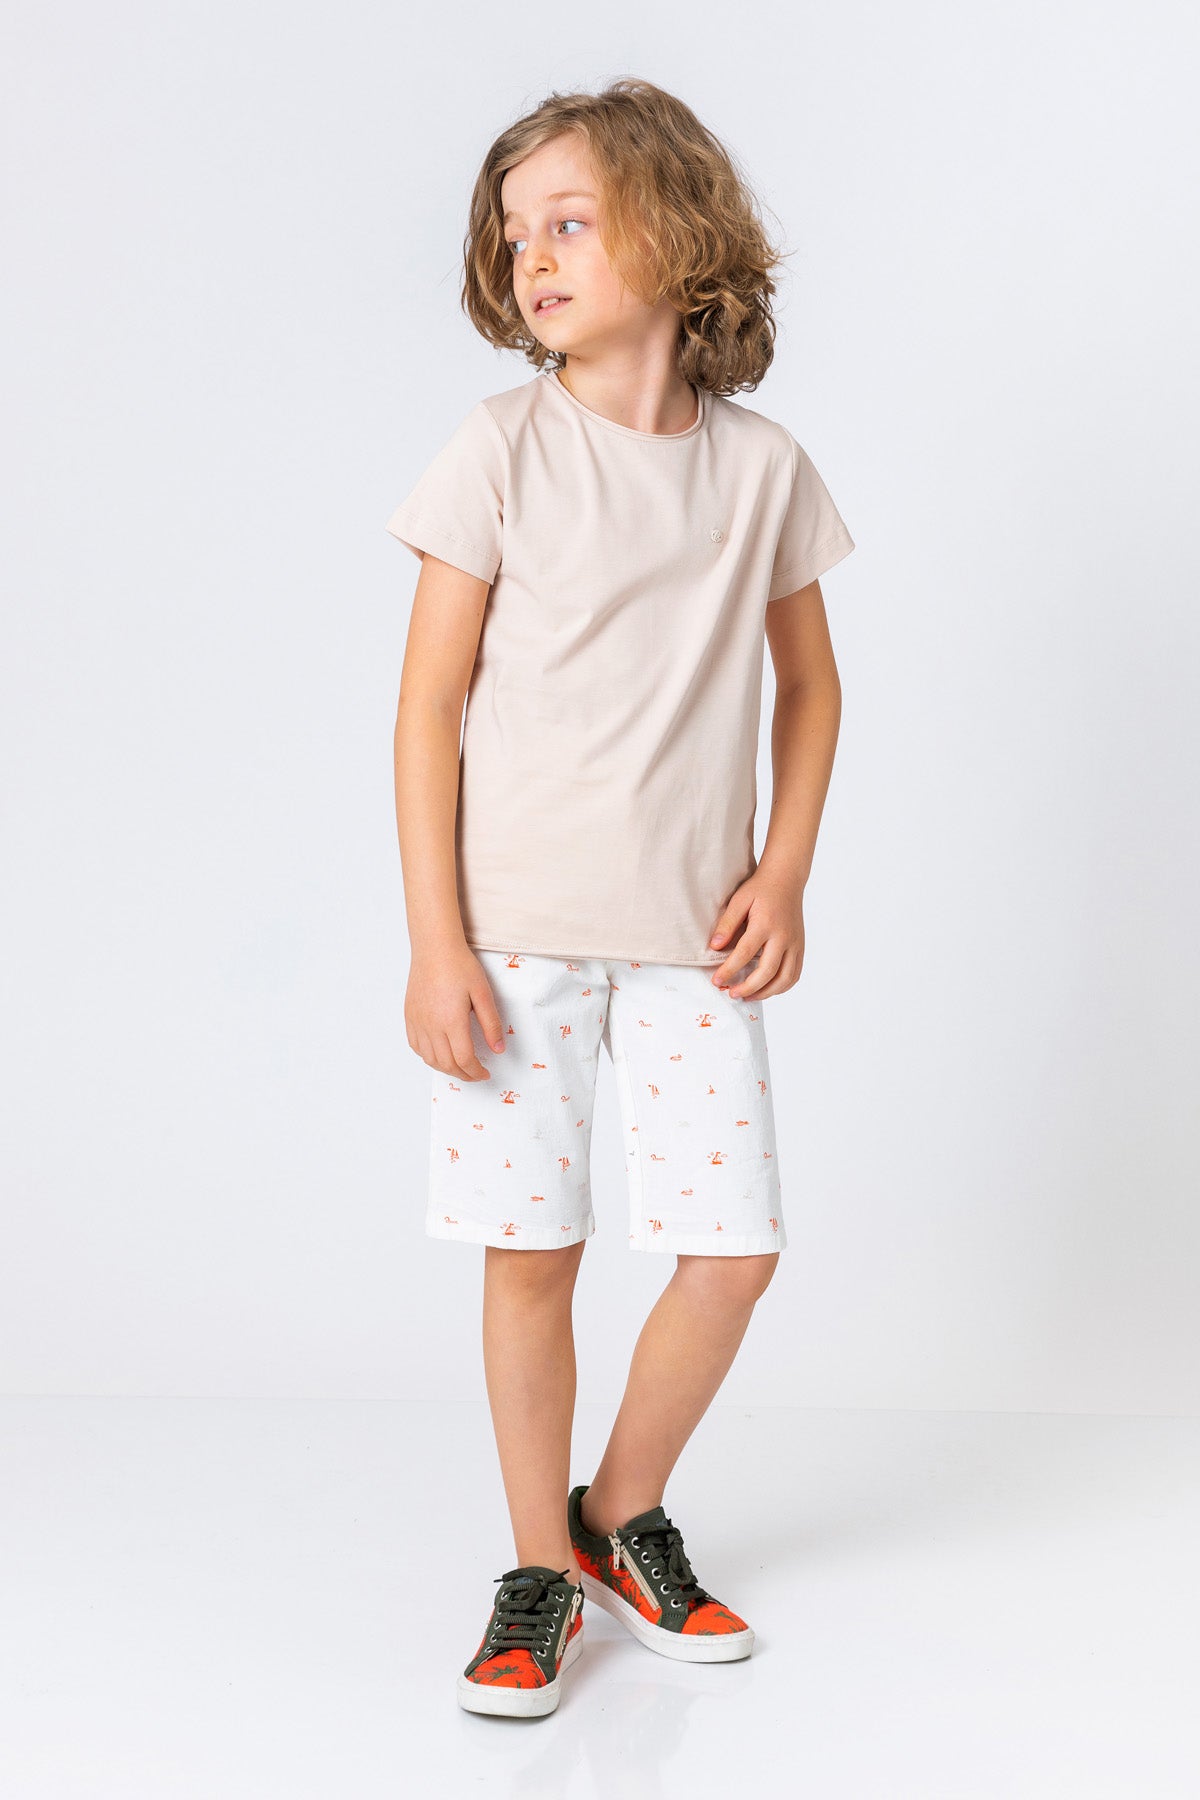 InCity Kids Boys Plain Solid Round Neck Short Sleeve Basic T-Shirt